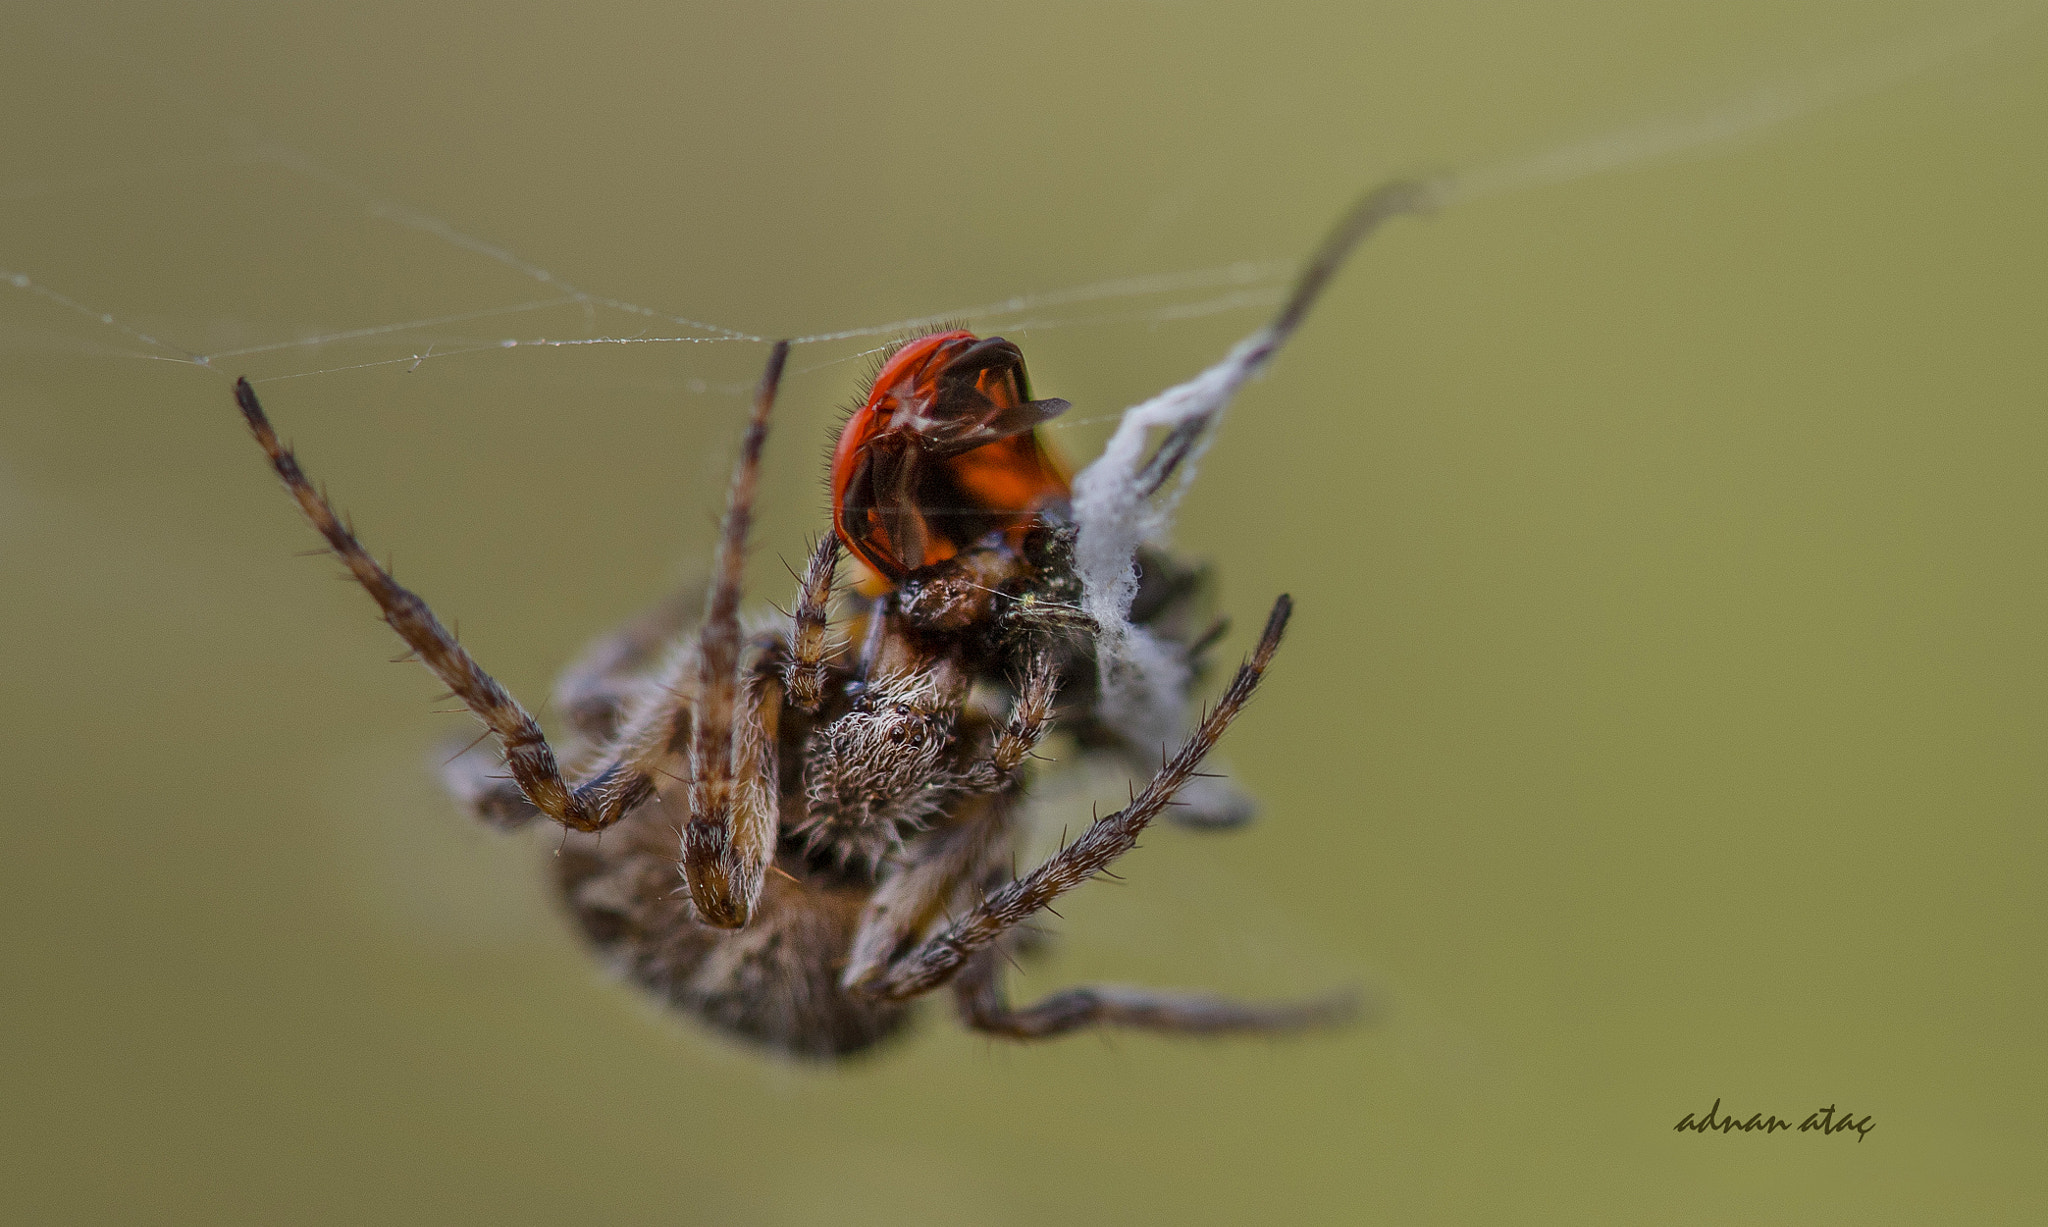 Nikon D5 + Nikon AF-S Micro-Nikkor 105mm F2.8G IF-ED VR sample photo. Bahçe örümceği (araneus diadematus, garden spider) ve uğur böceği (coccinella septempunctata) photography